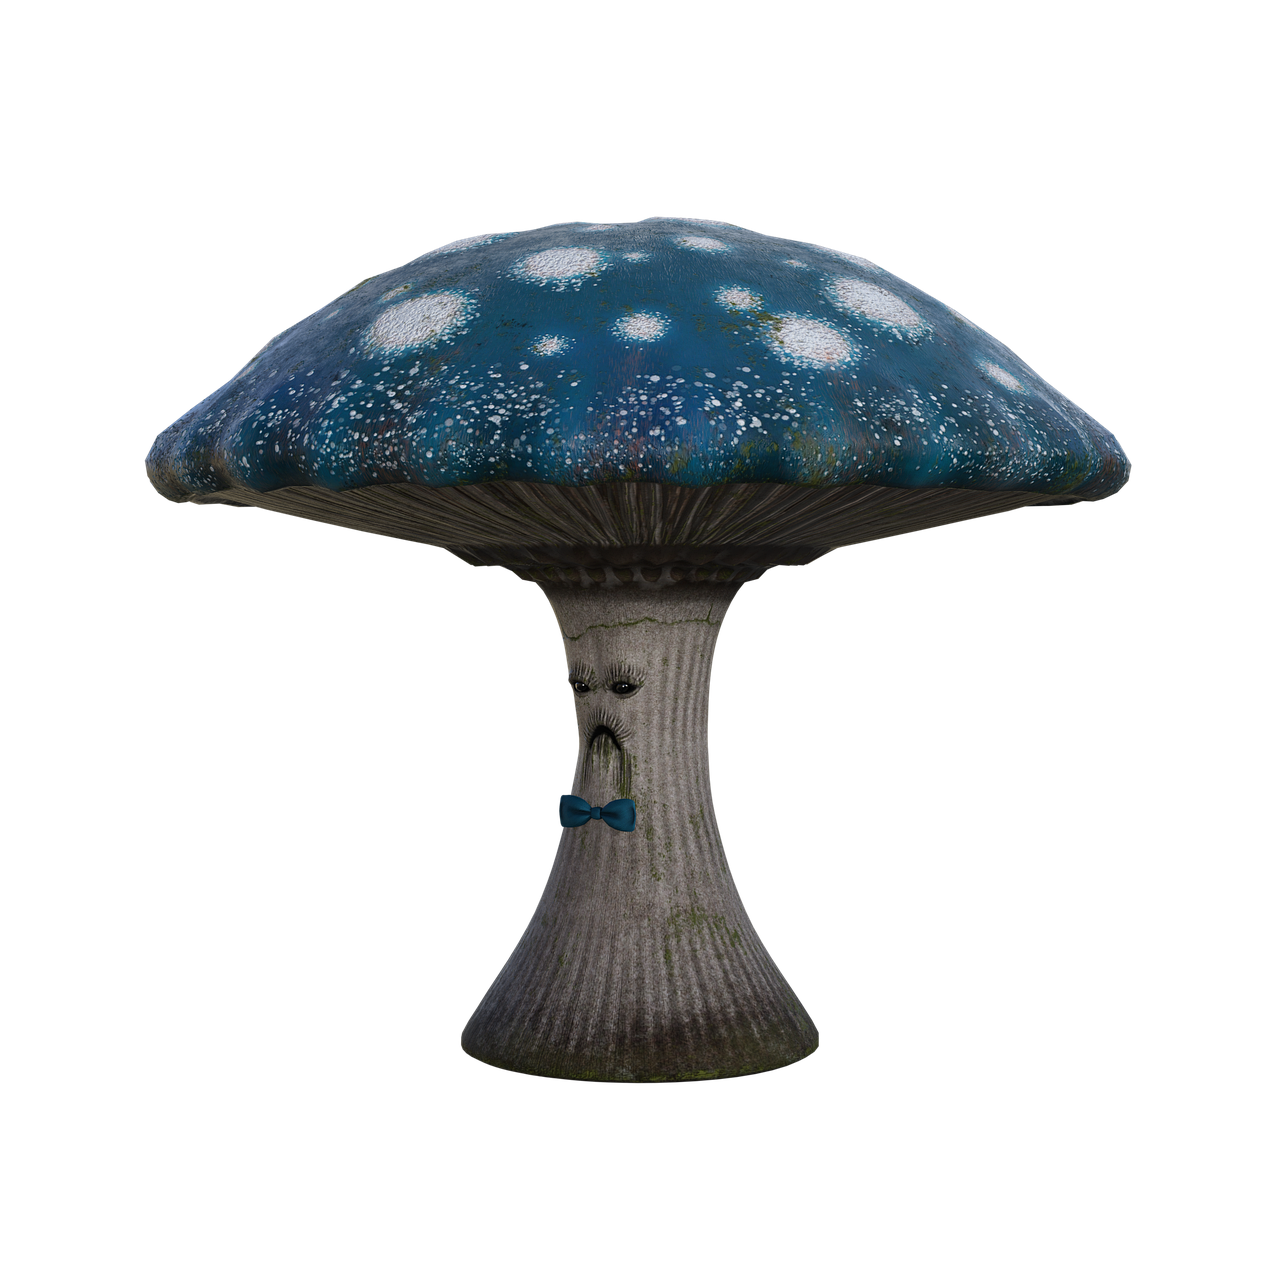 mister-mushroom-gc94d13a89_1280